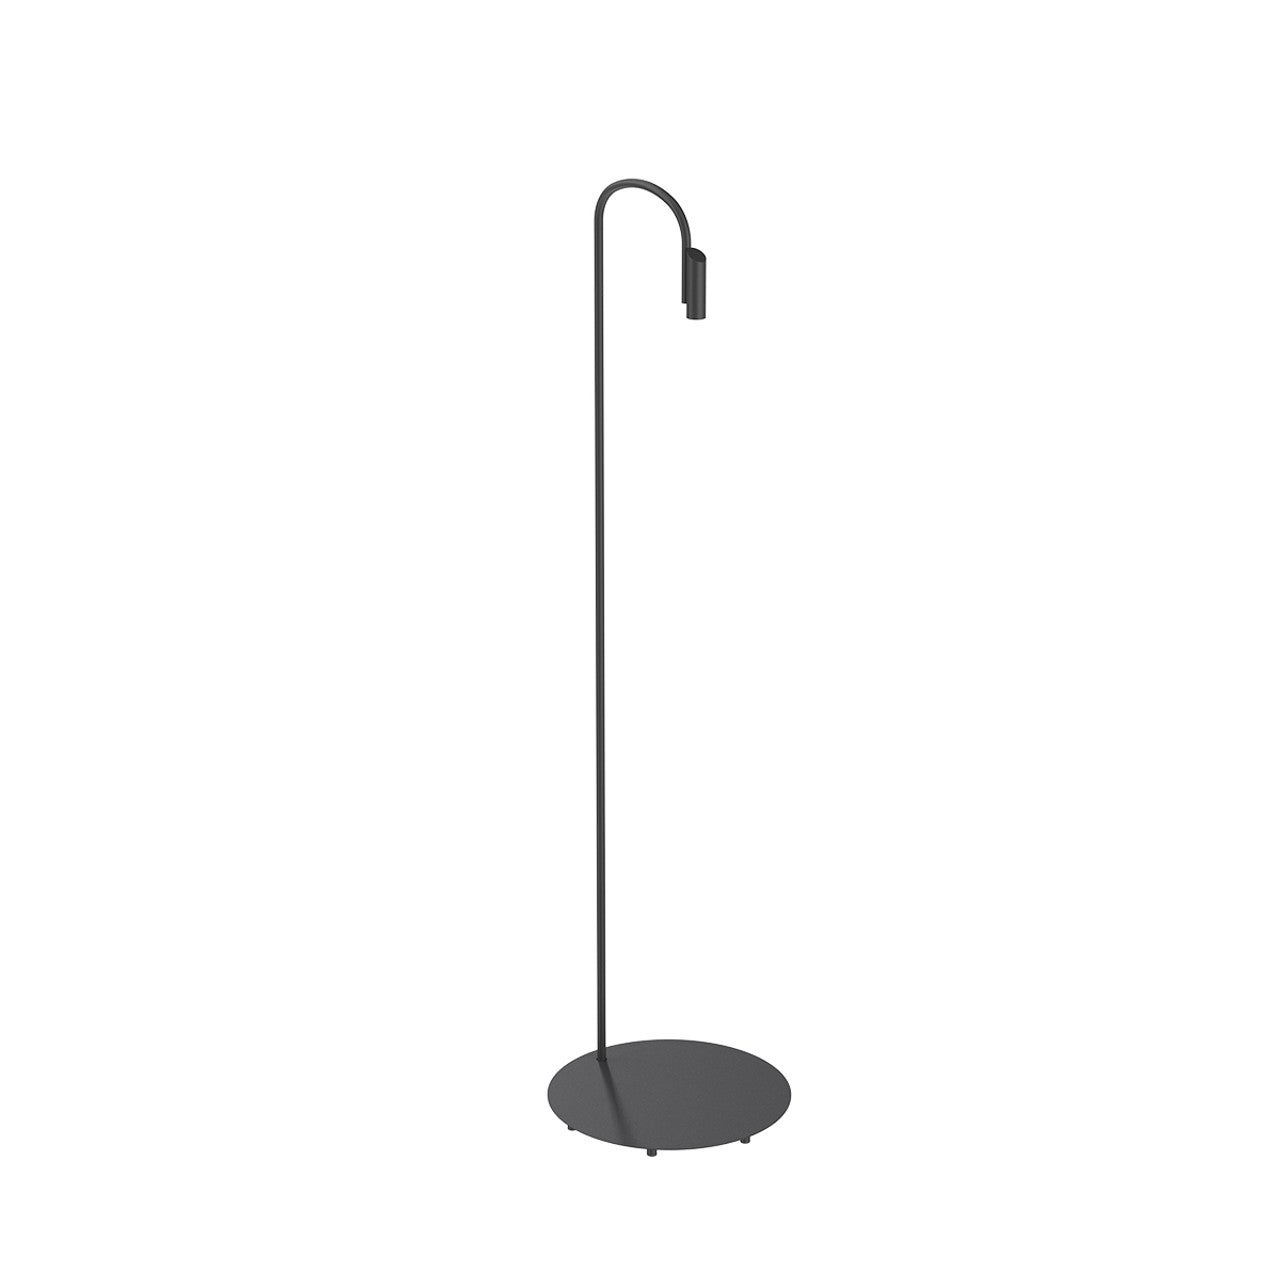 Flos Caule 3000K Model 4 Outdoor Floor Lamp in Black with Regular Shade